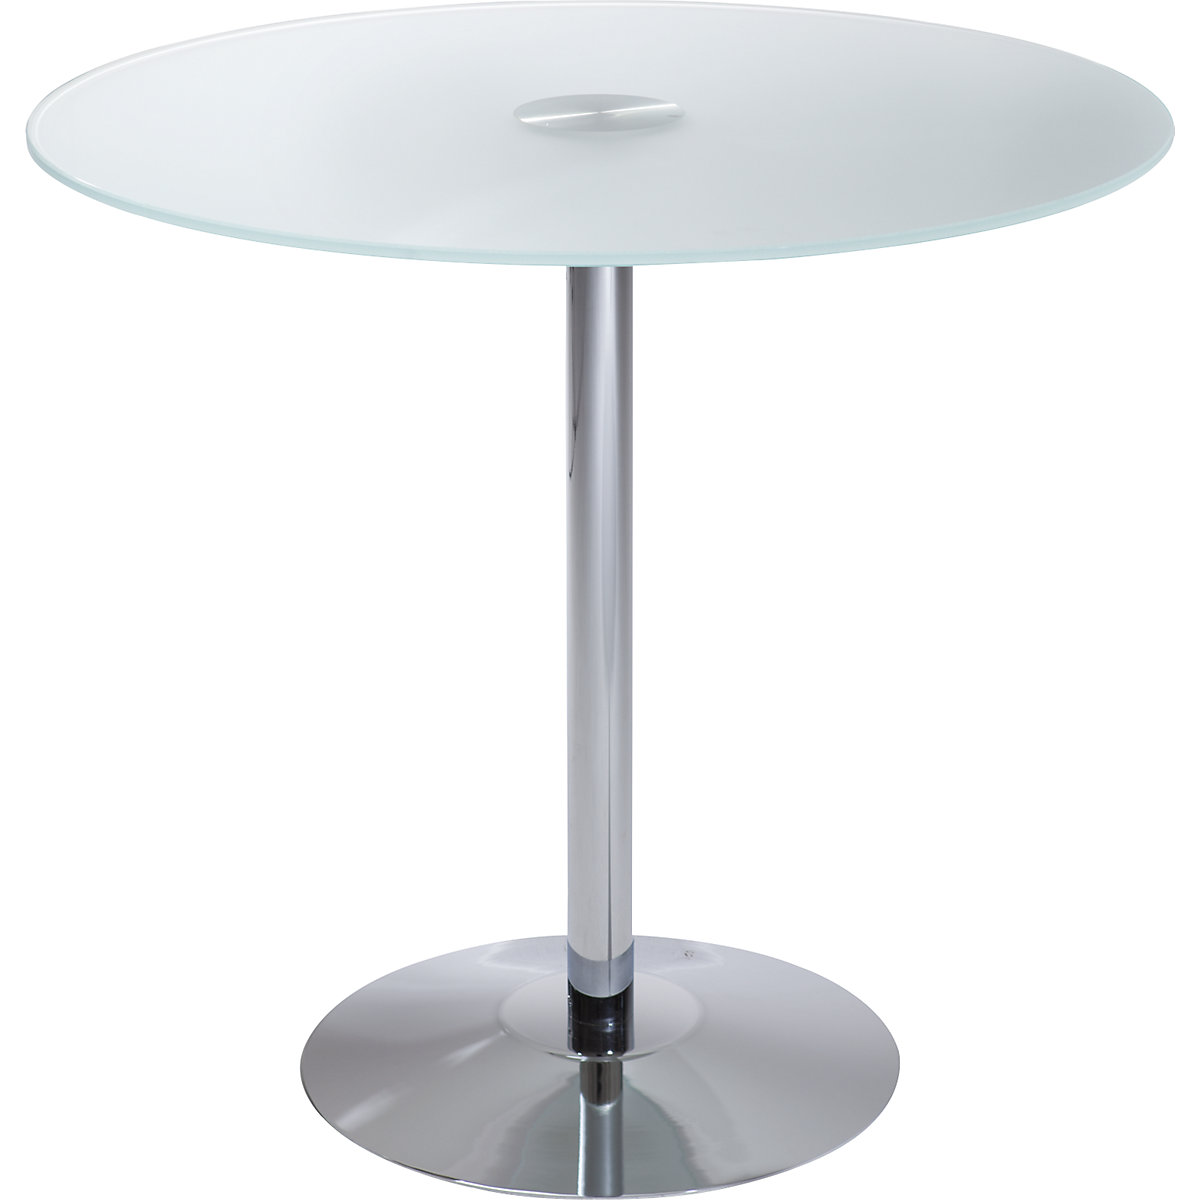 Pedestal table, Ø 800 mm, height 720 mm, satin finish glass top-4